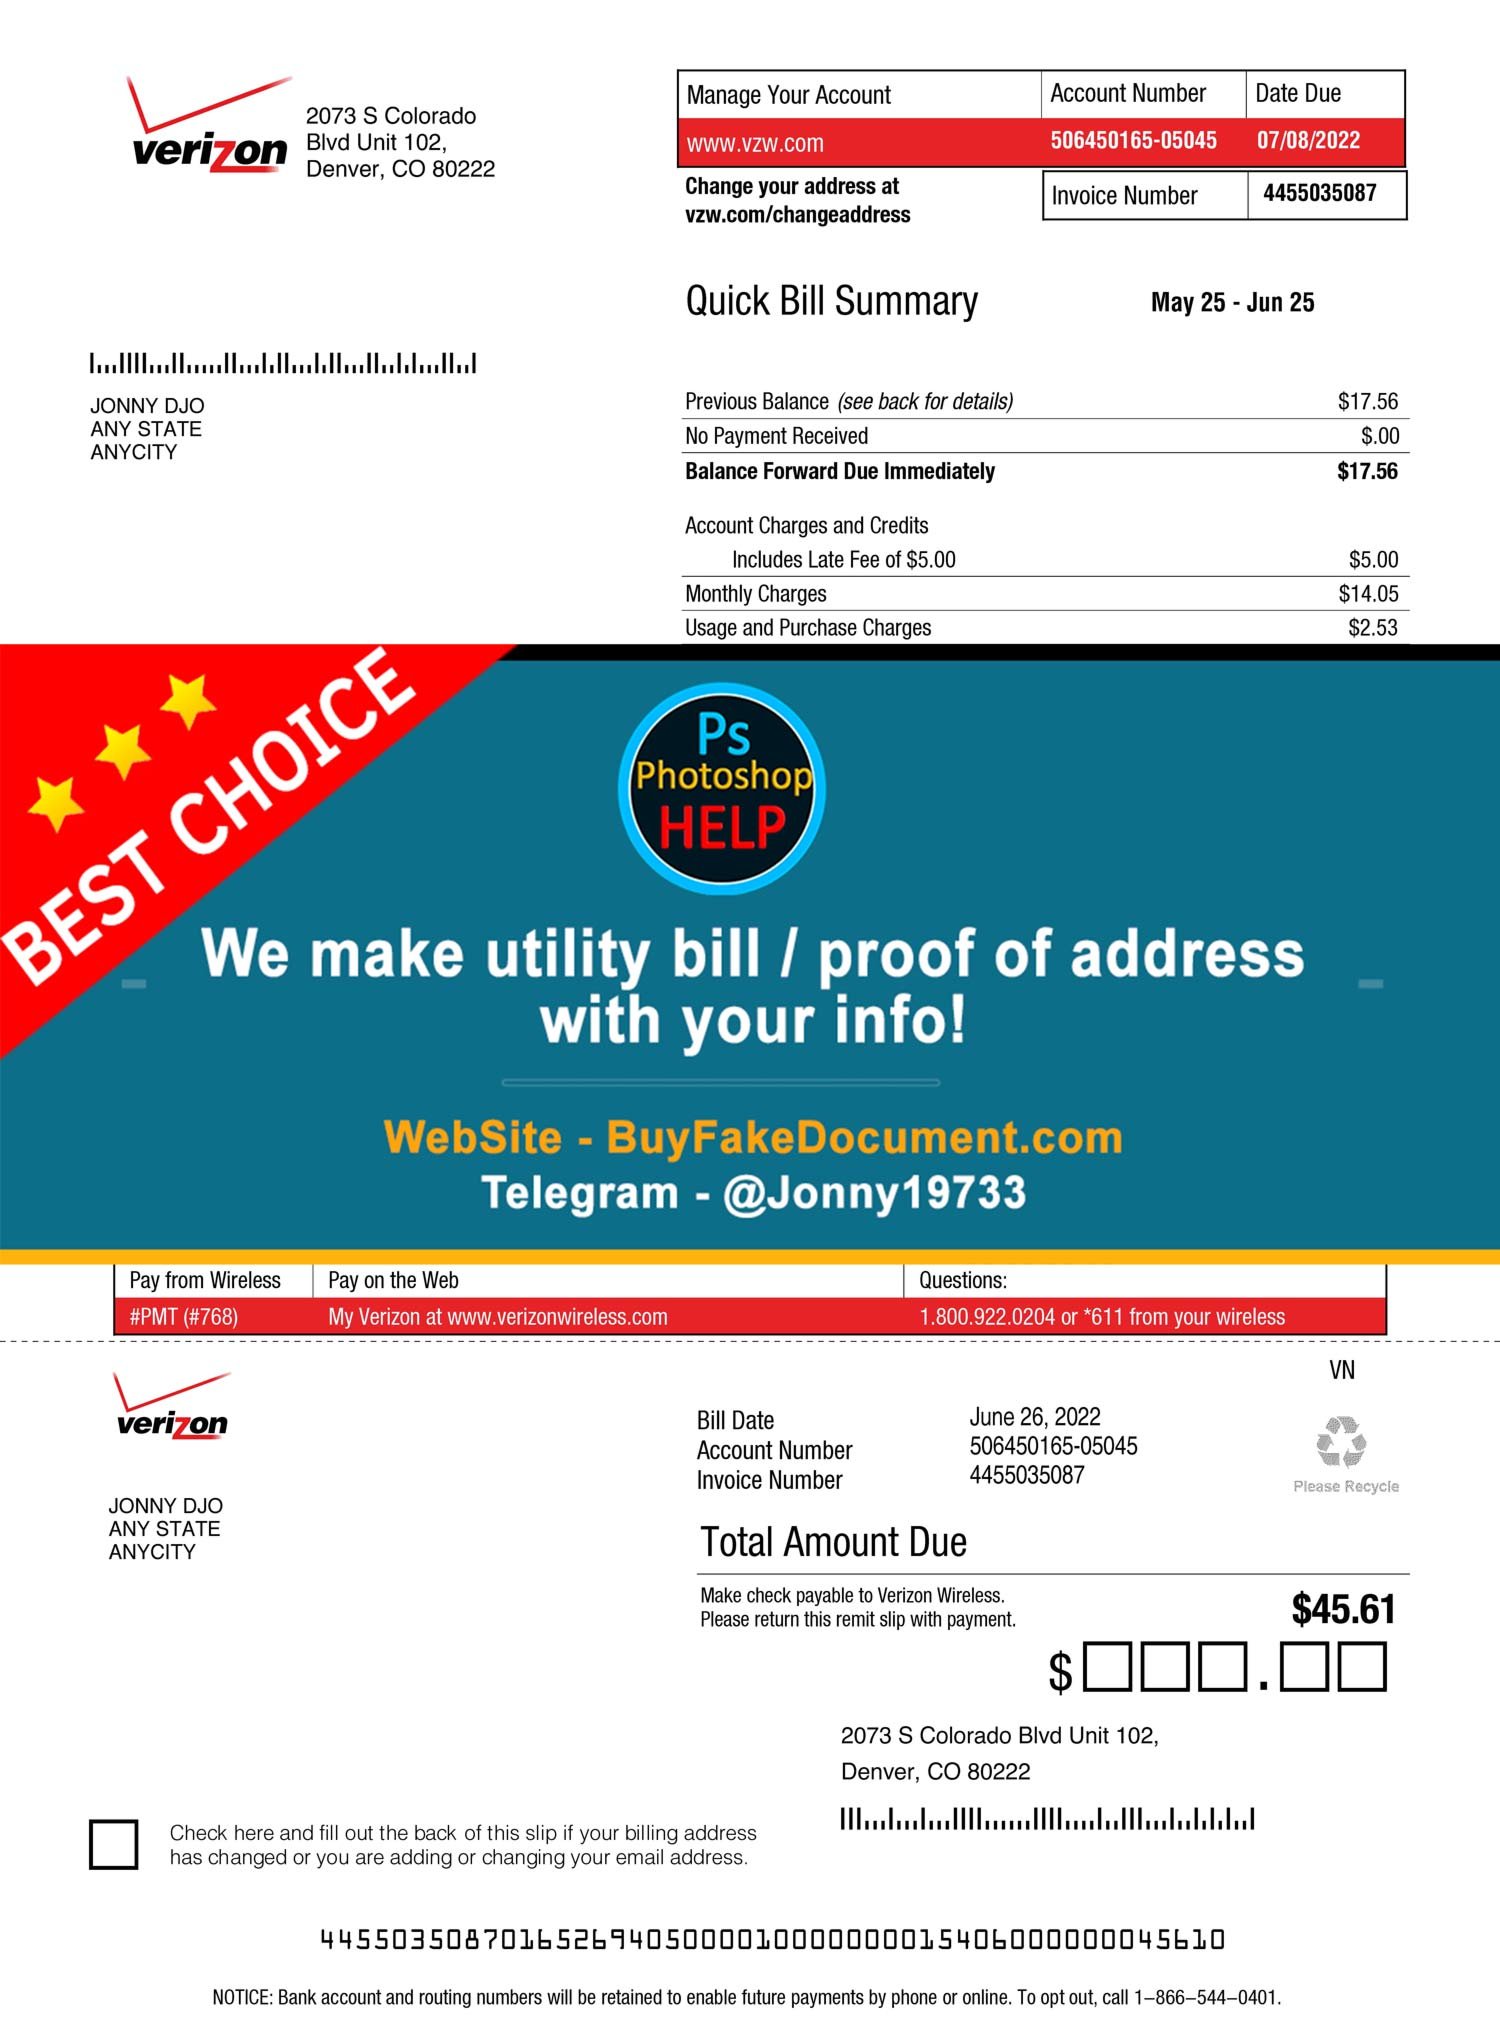 Georgia Verizon utility bill Fake Utility bill